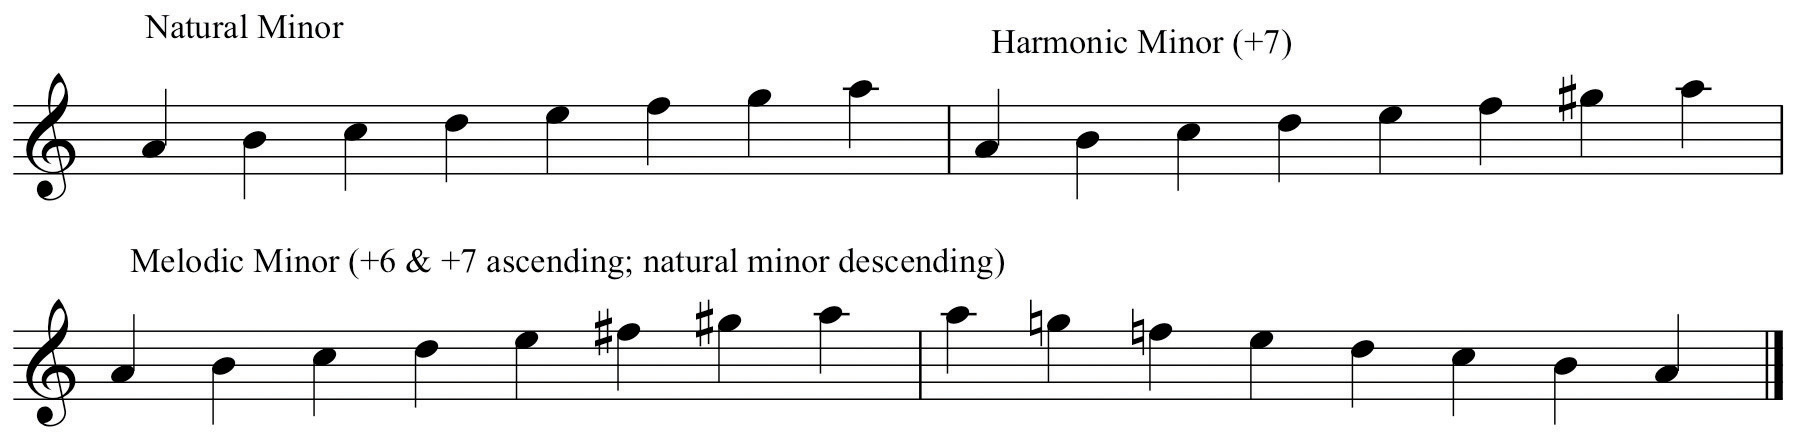 bass clef e flat major scale